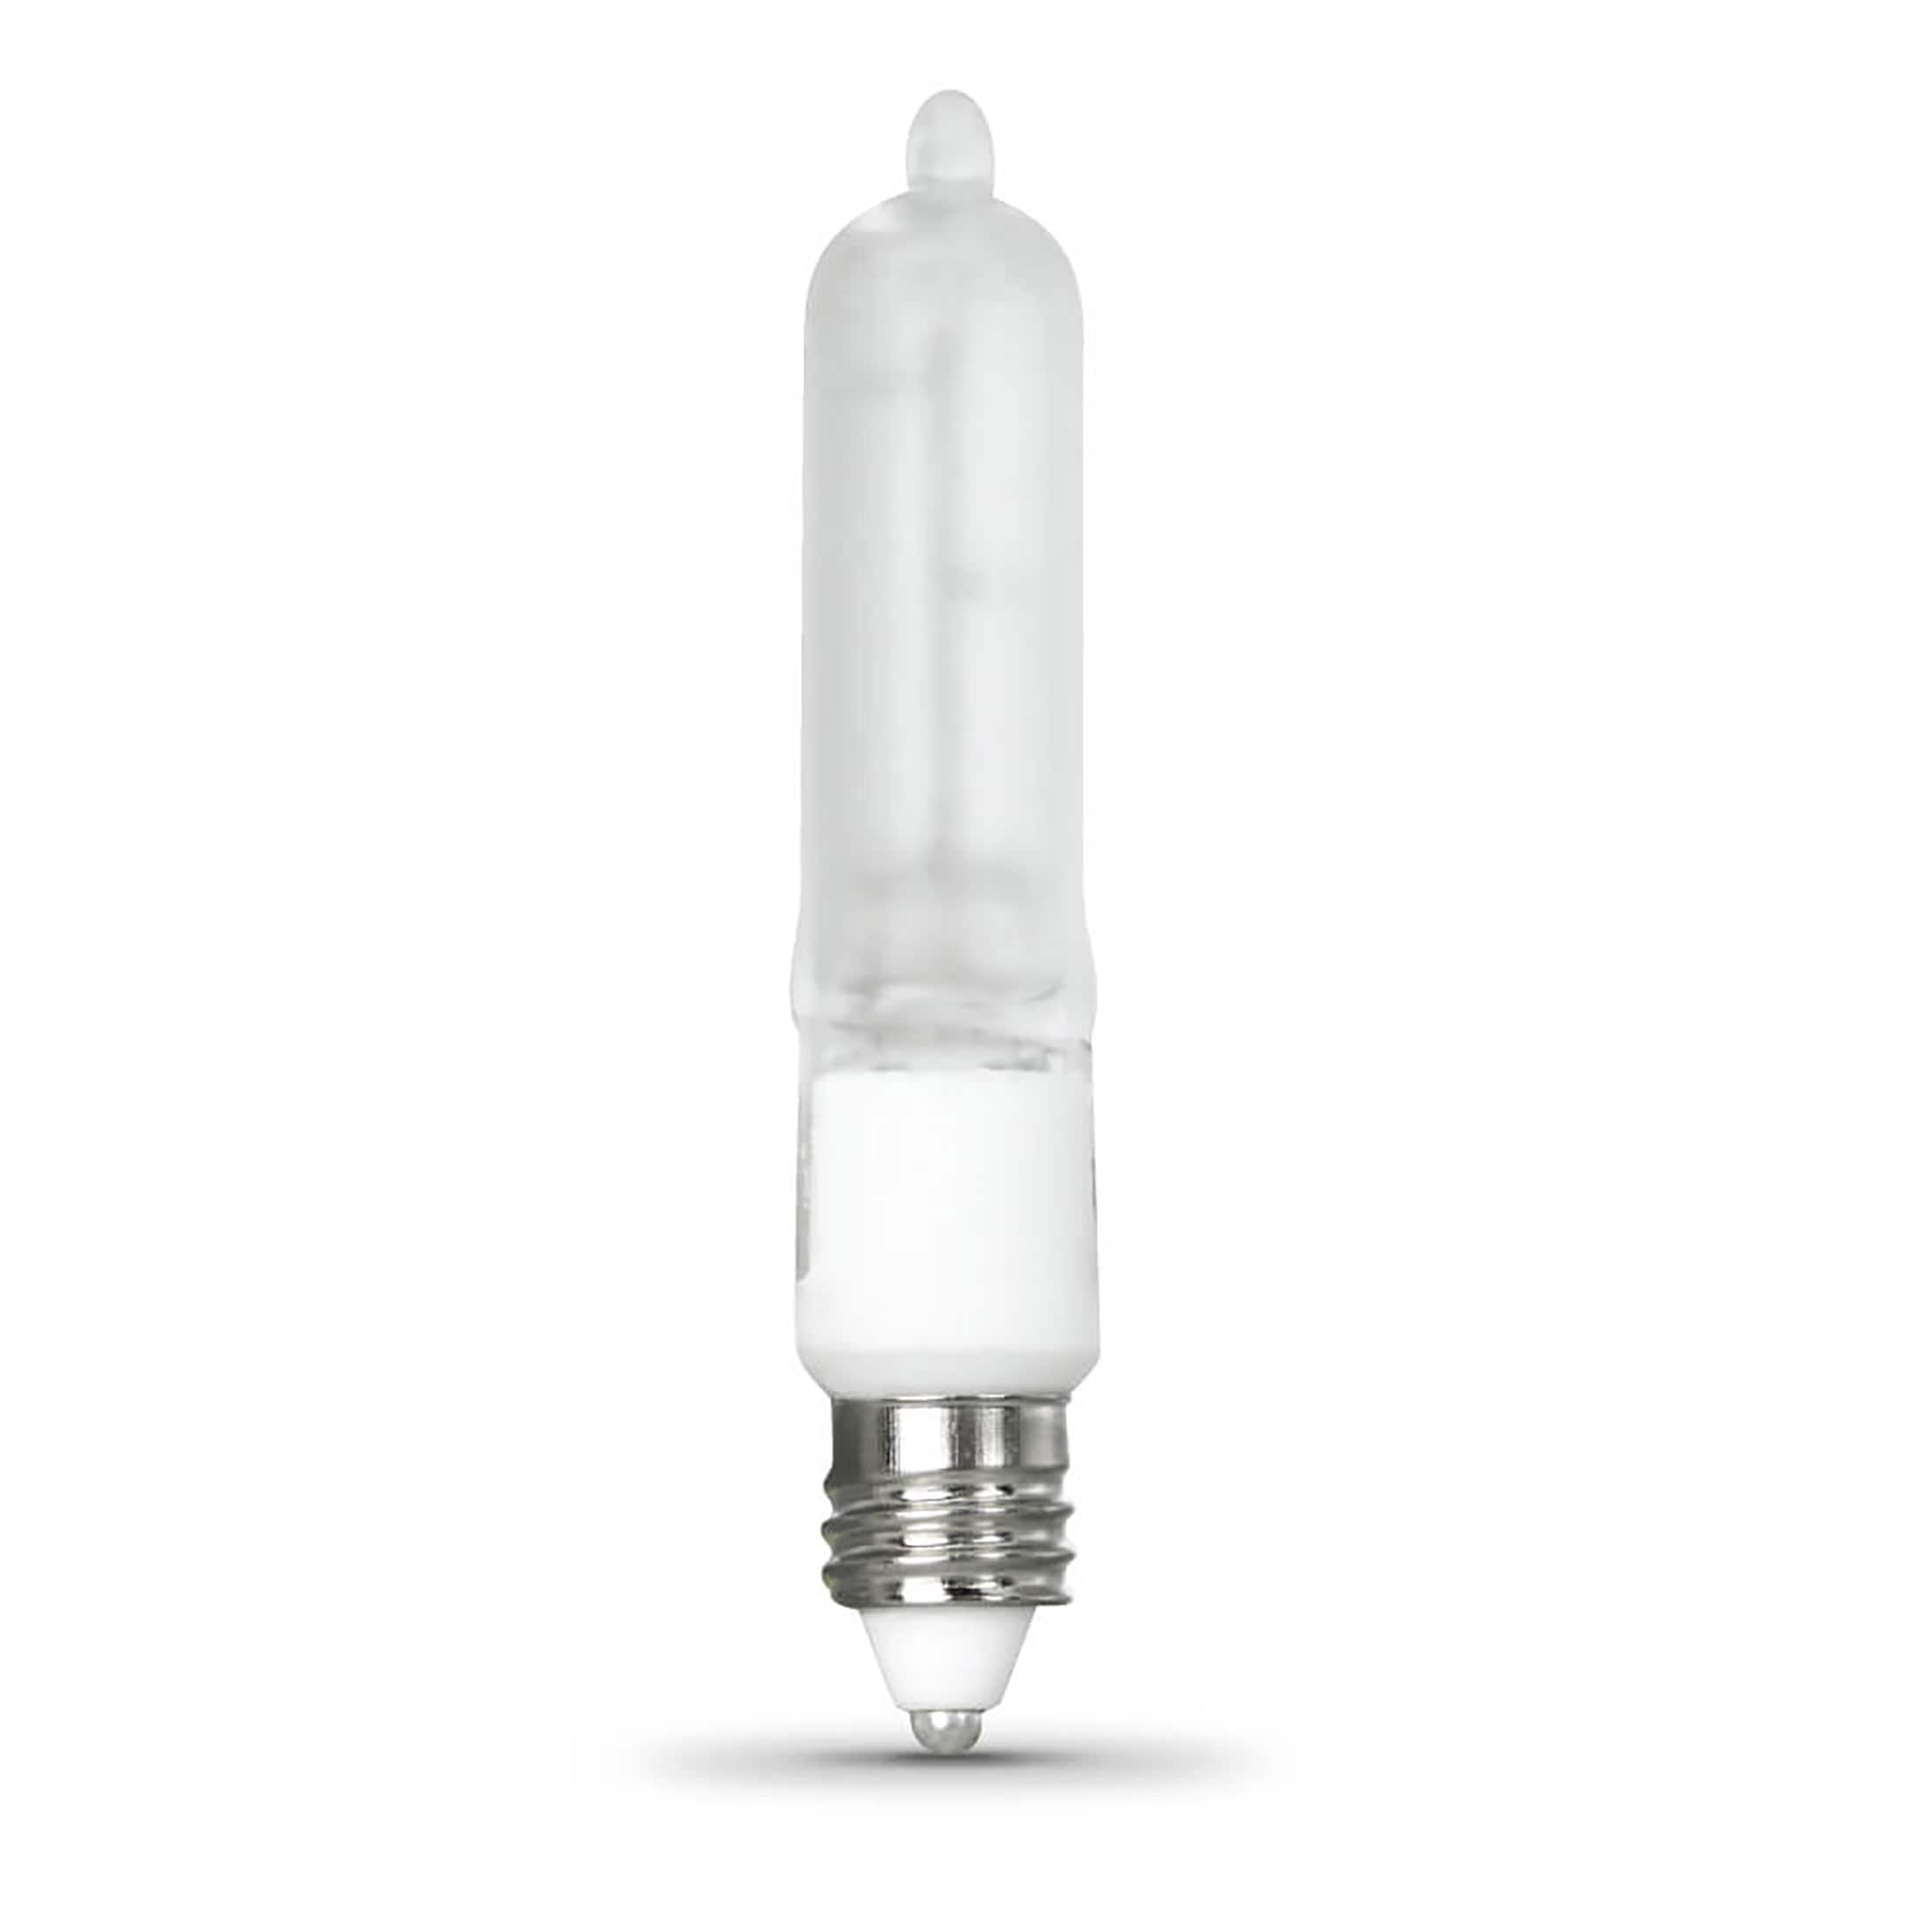 Dimmable Halogen Light Bulb